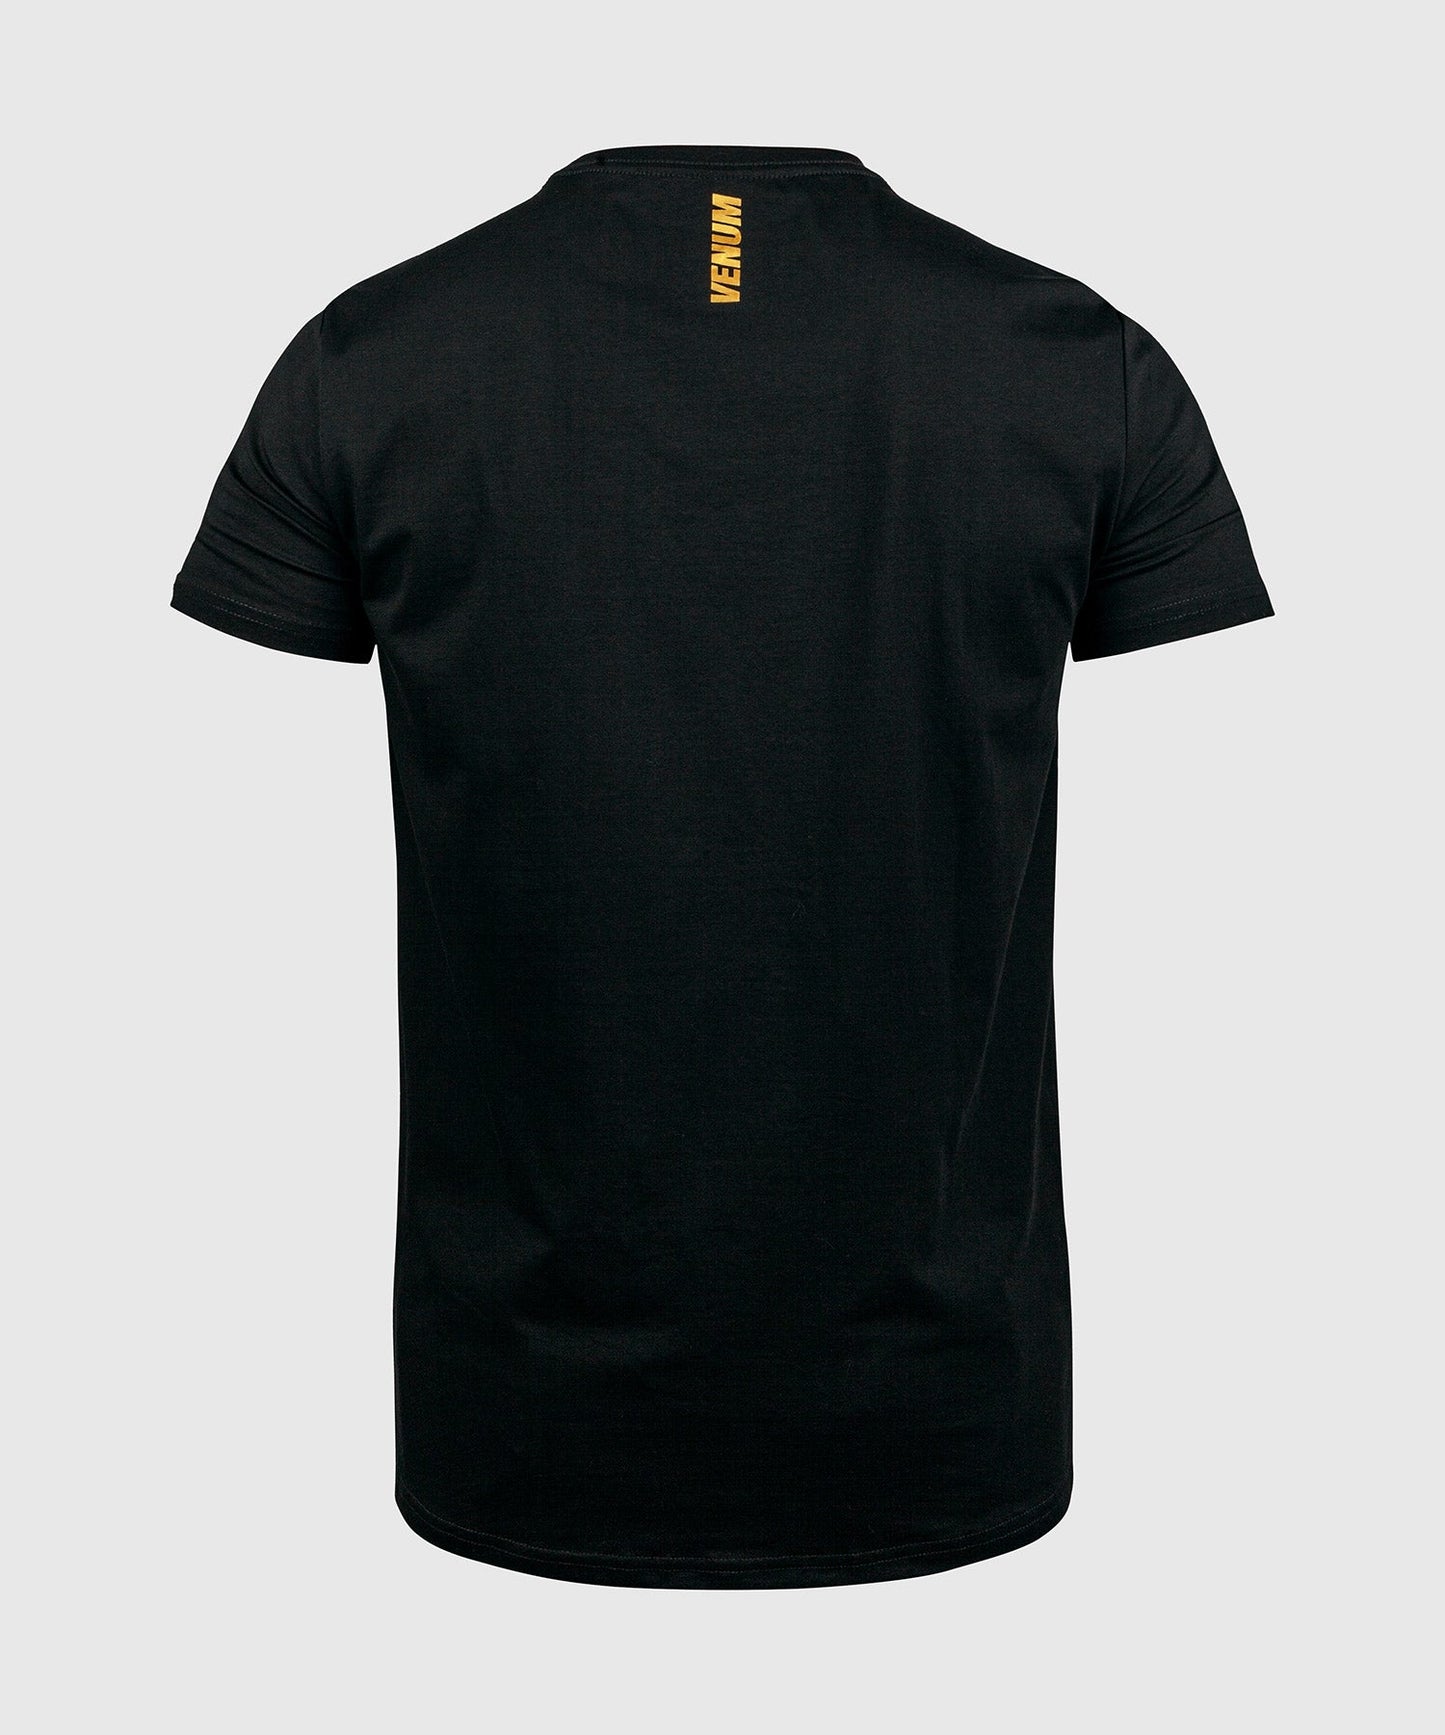 Venum Muay Thai VT T-shirt - Black/Gold